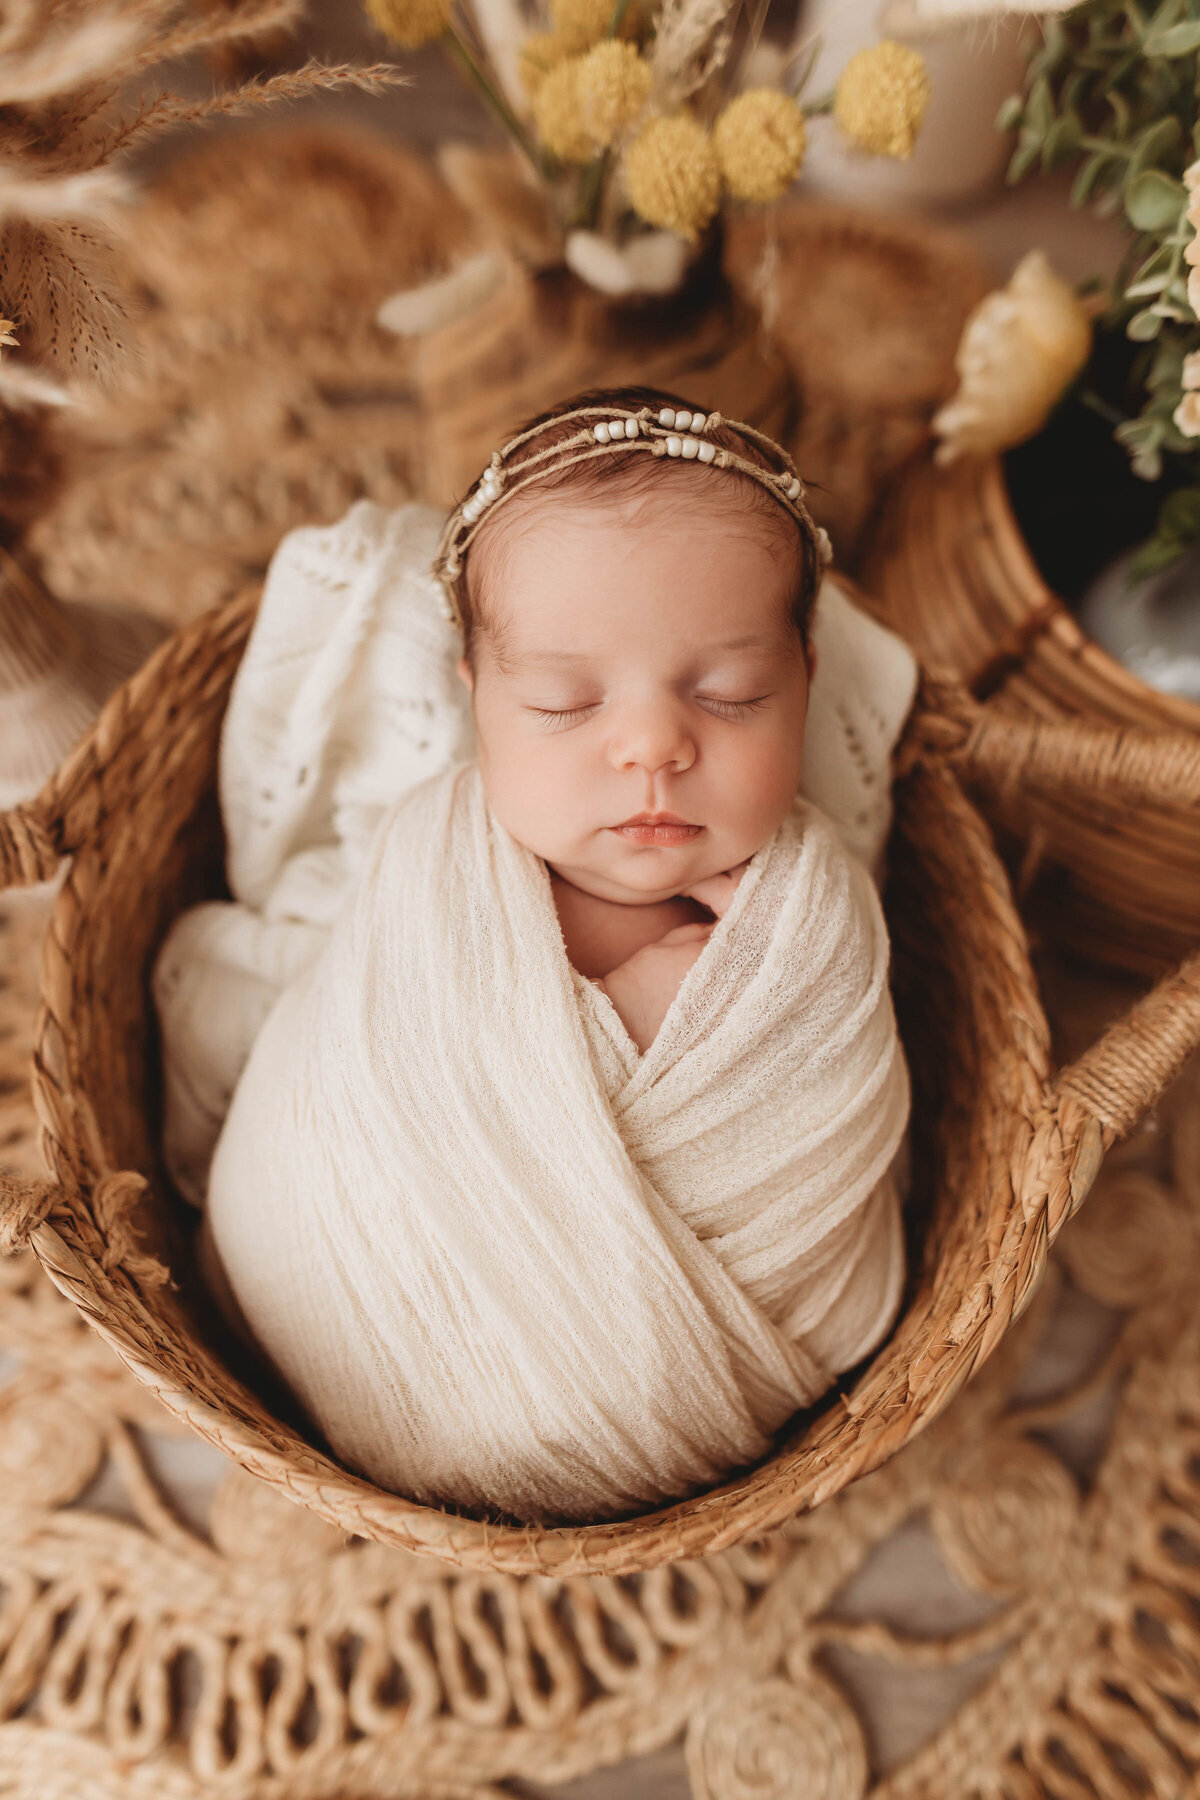 Newborn baby girl wrapped in a cream blanket wearing a dainty headband in a wooden basket.